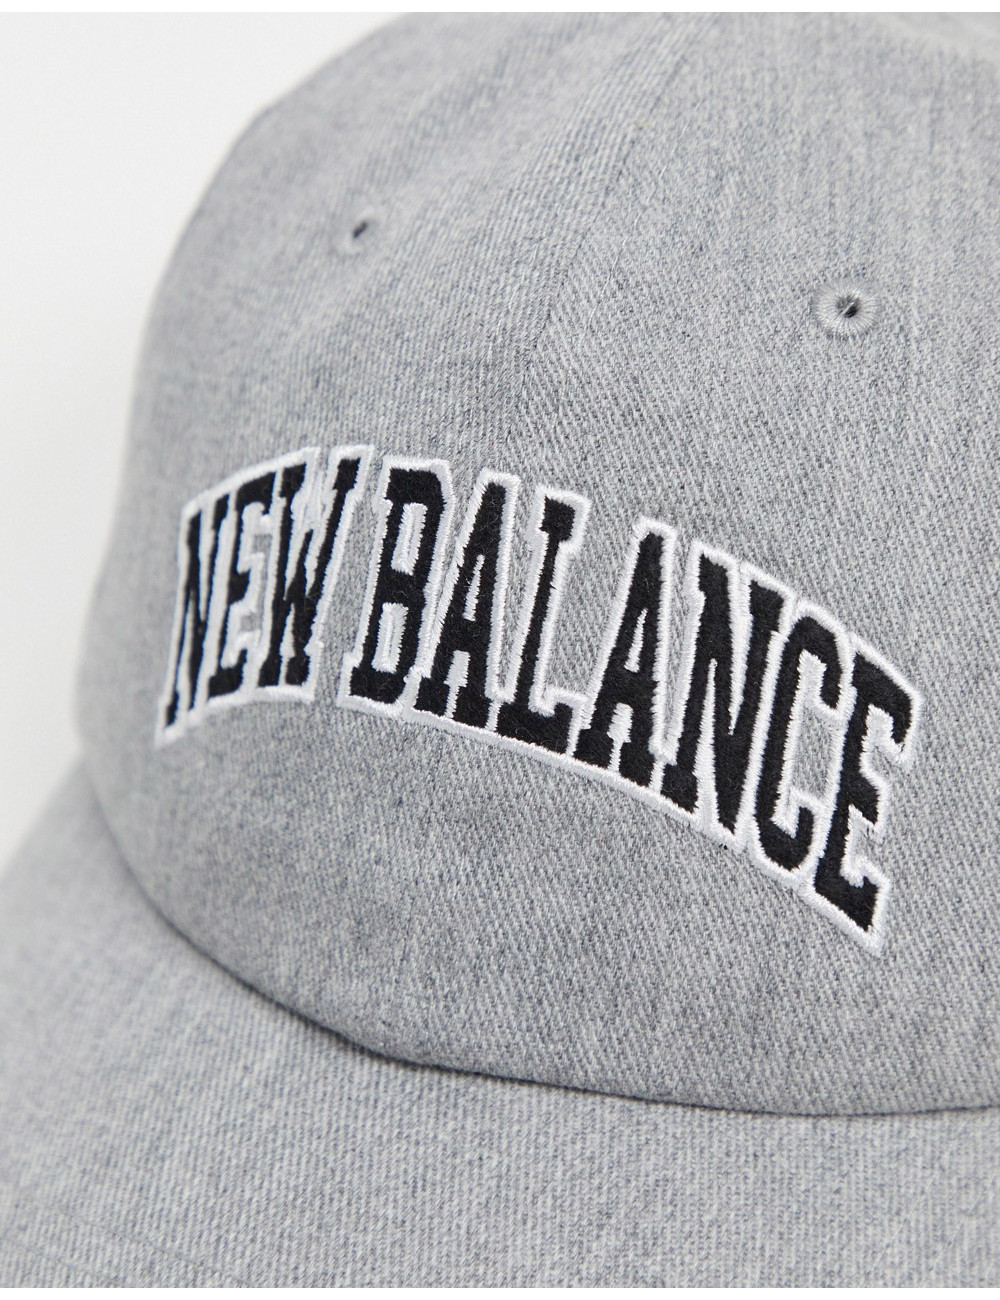 New Balance collegiate logo...